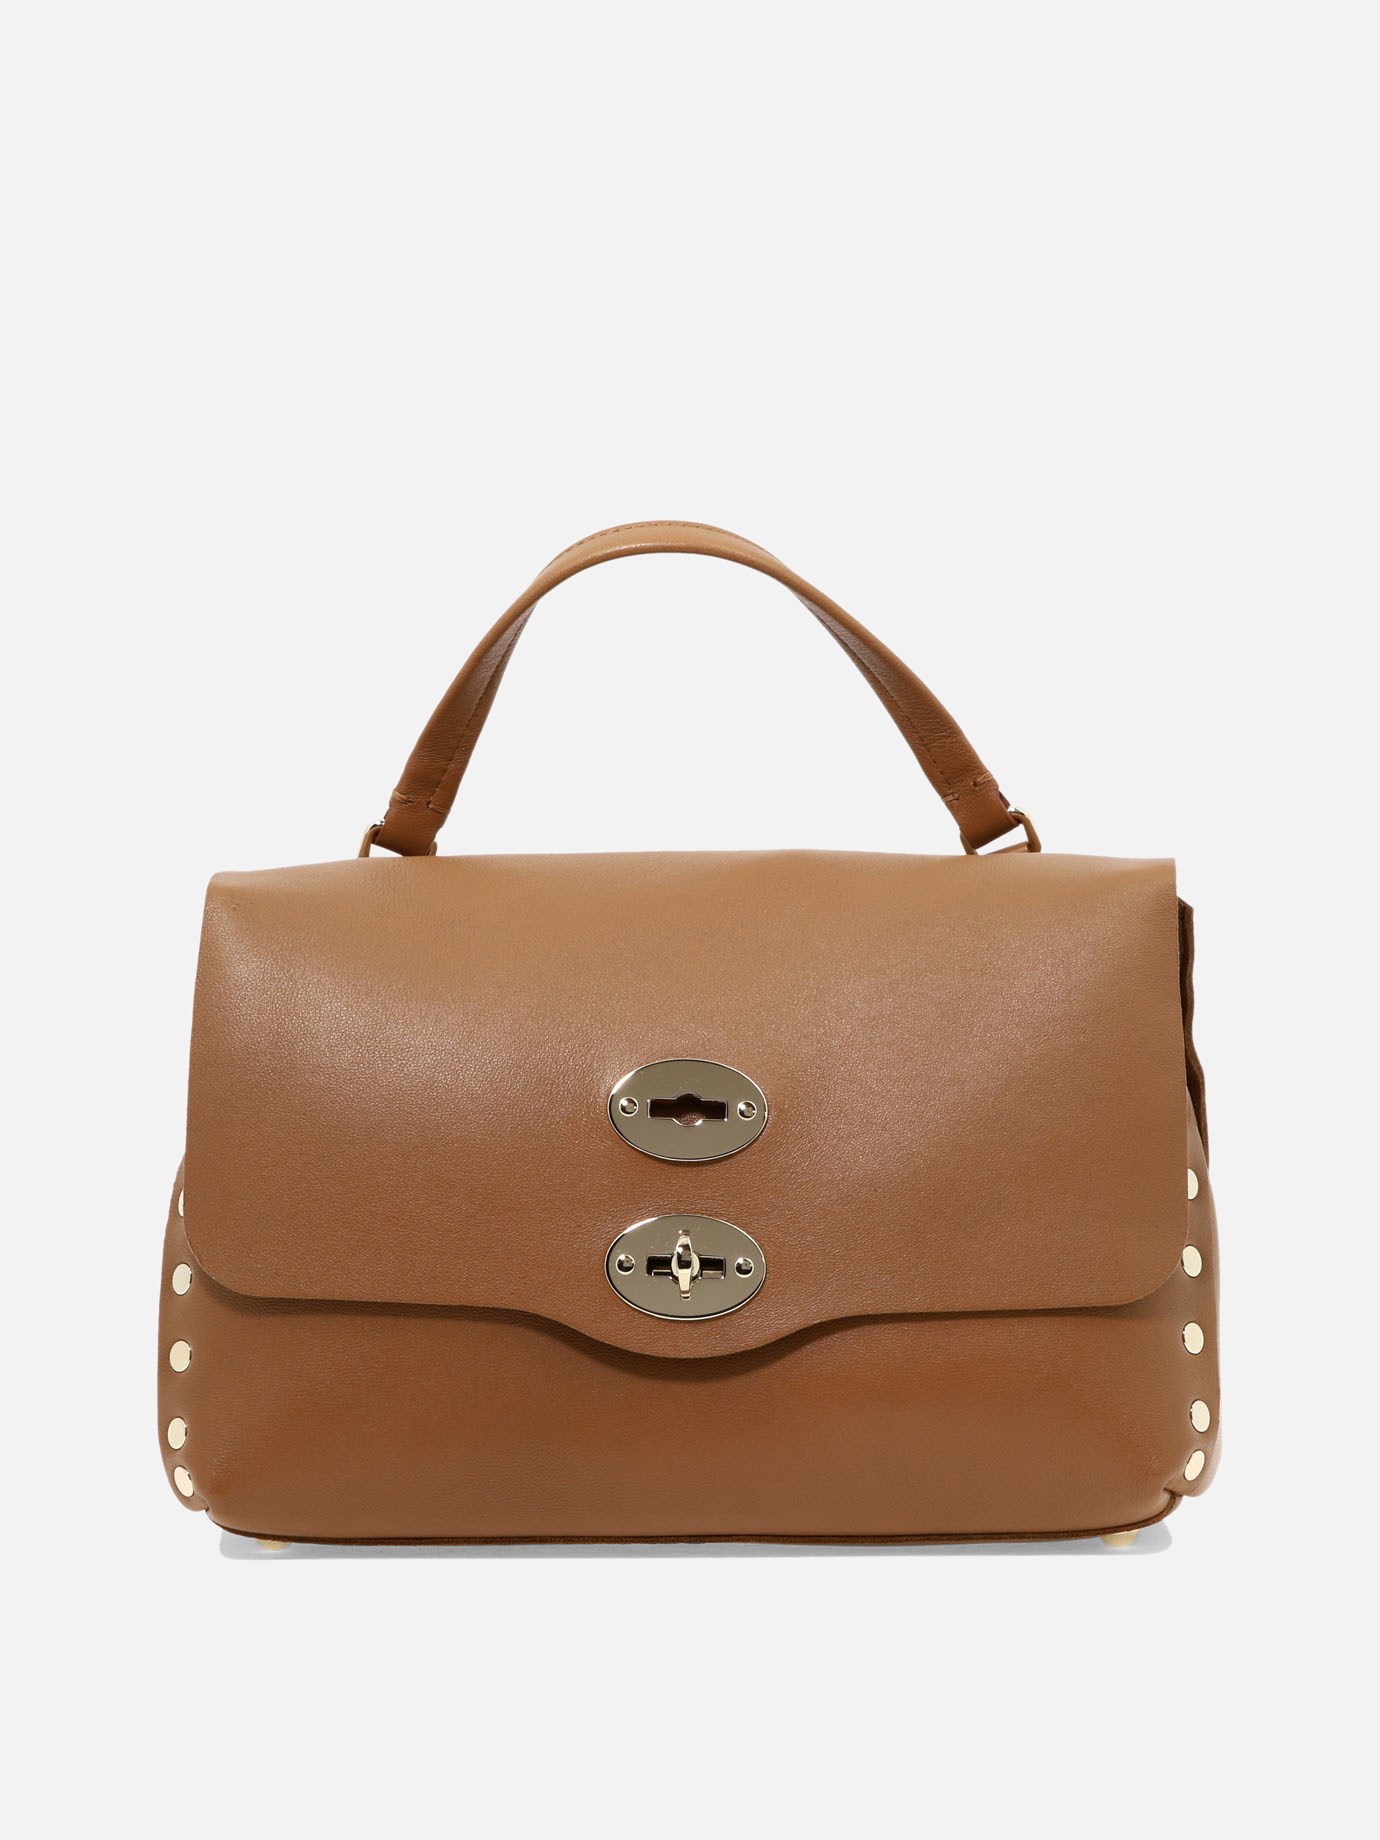  Postina S Heritage  handbag by Zanellato